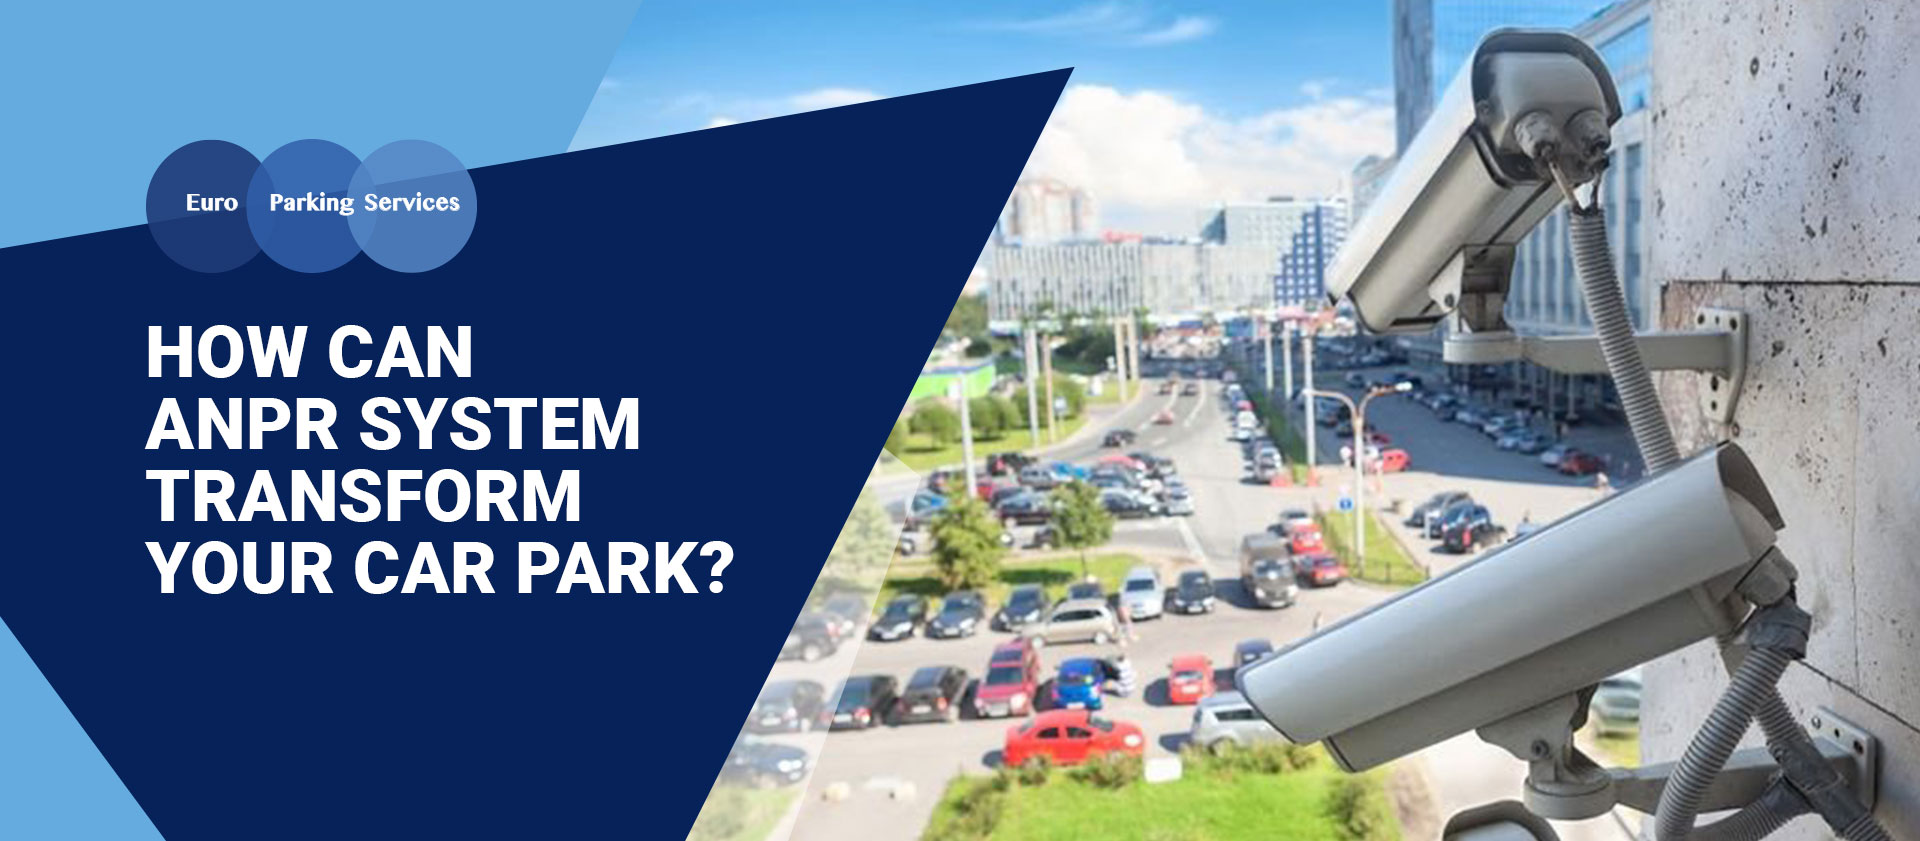 ANPR System Transform Your Car Park